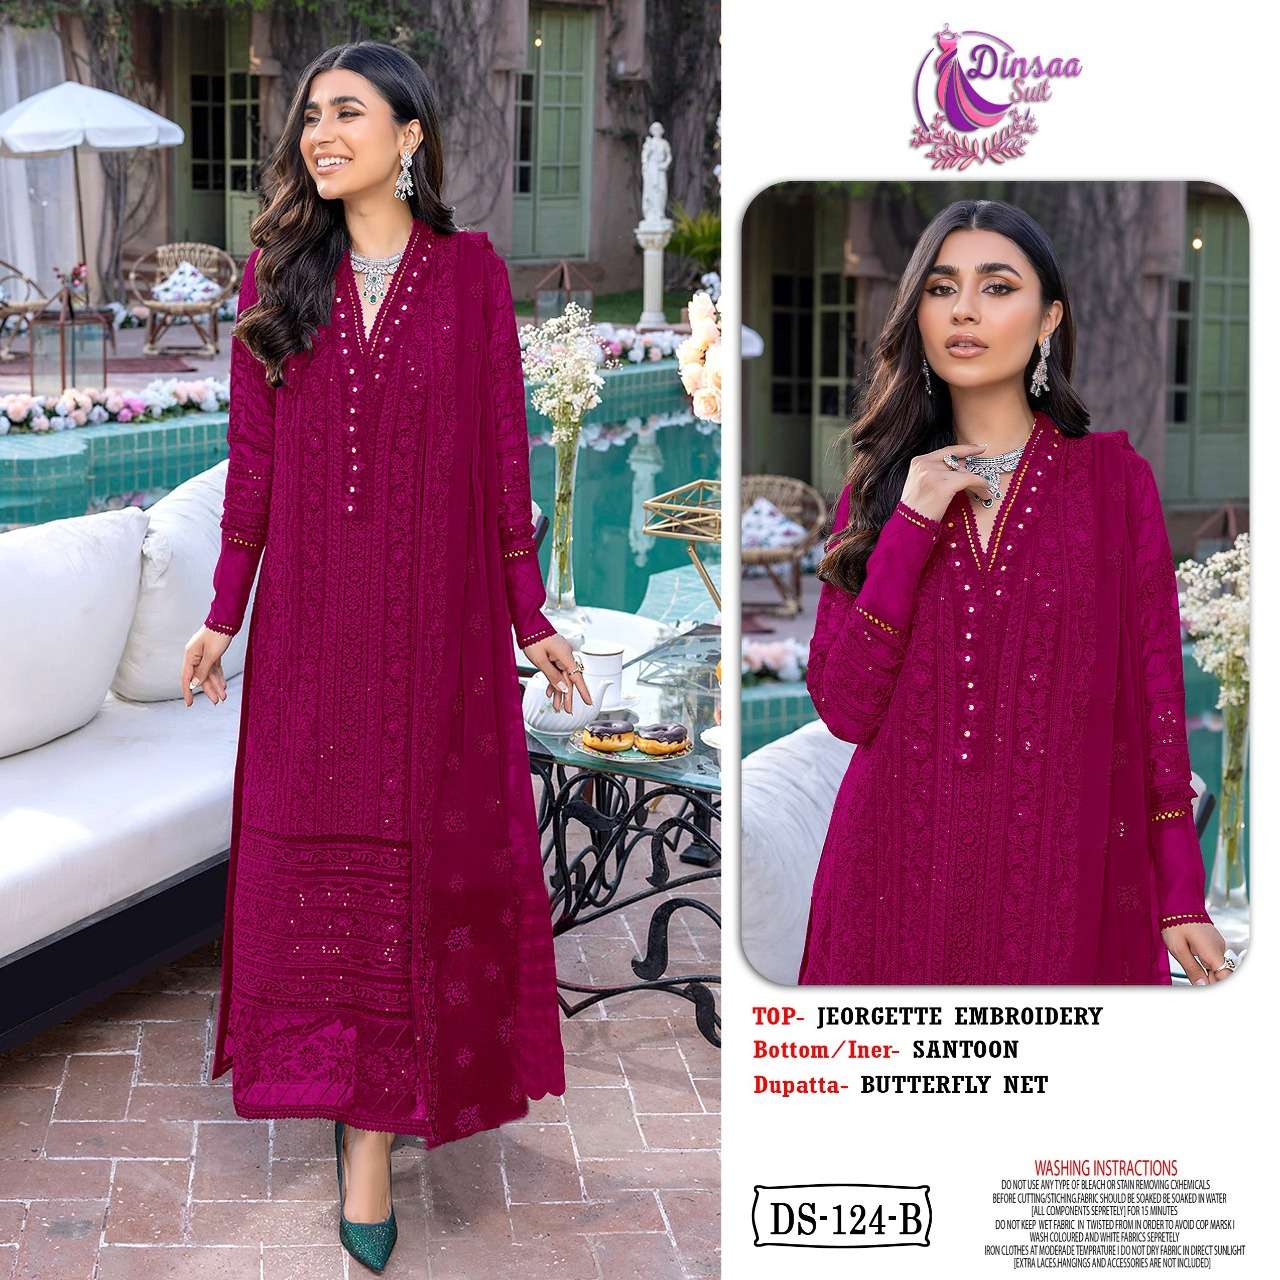 dinsaa suits 124 color edition georgette embroidered salwar kameez wholesale price surat